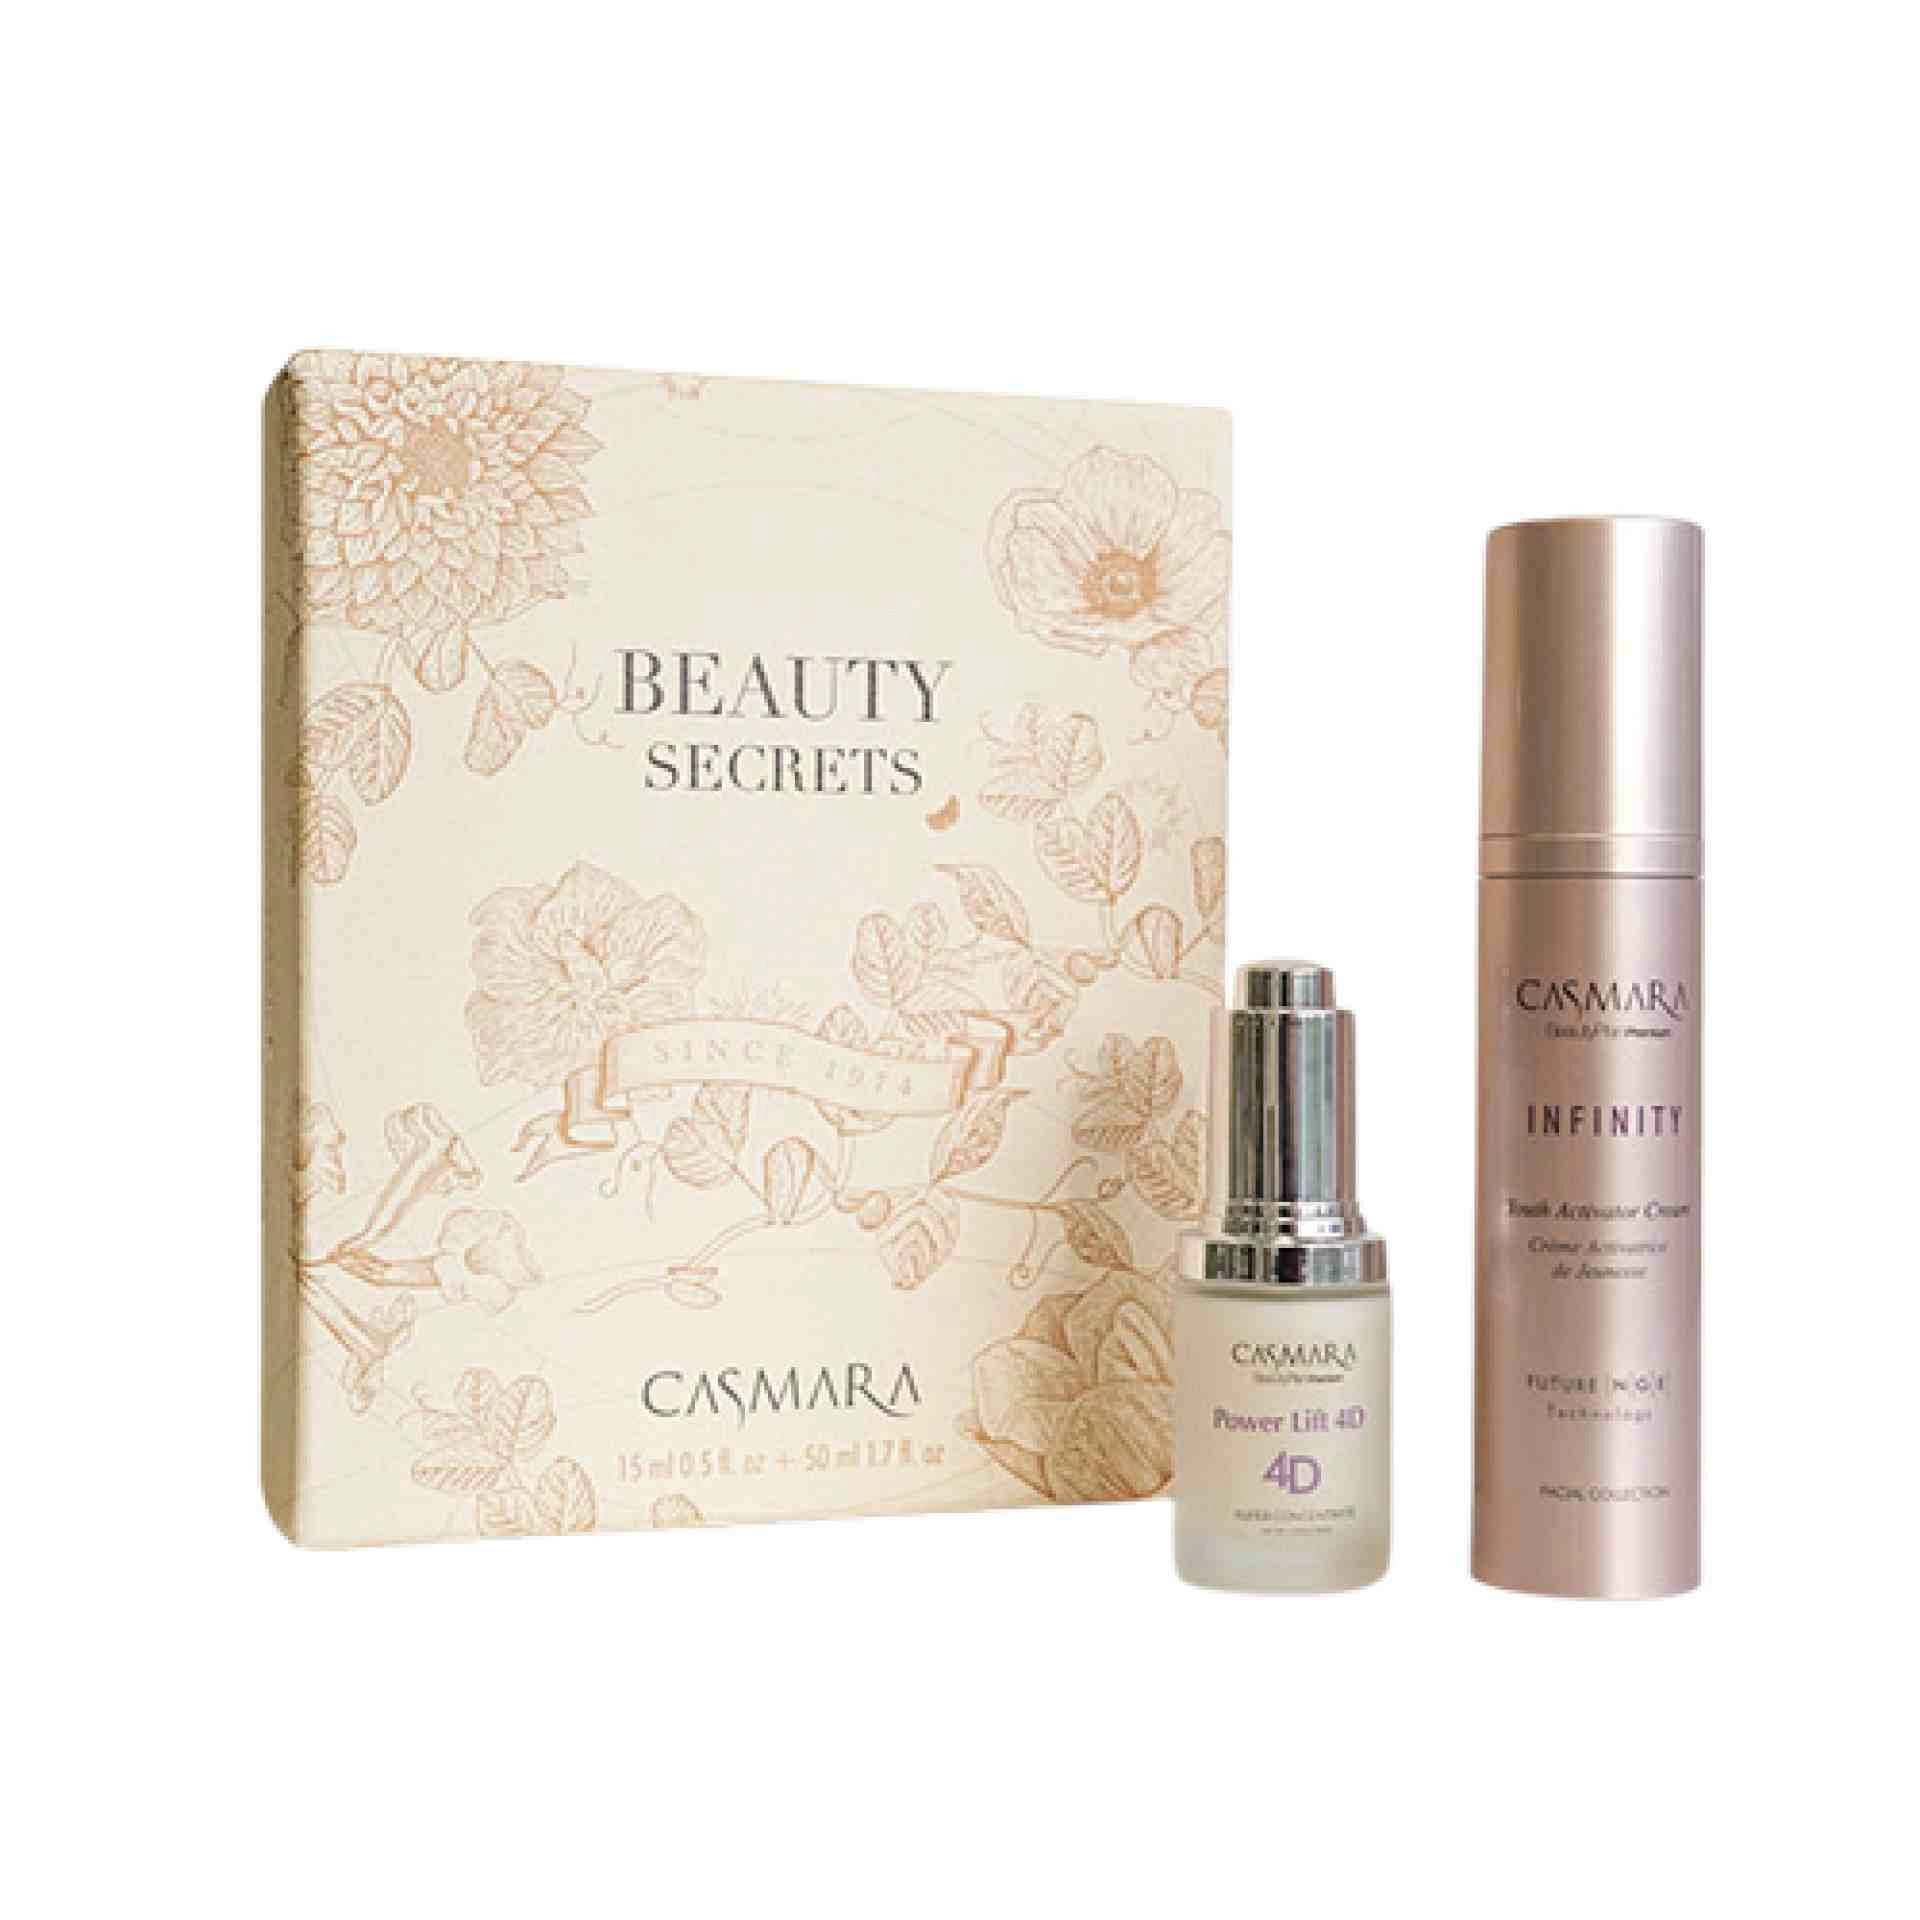 Beauty Secrets | Power Lift 4D 30ml + Infinity Cream 50ml - Casmara ®